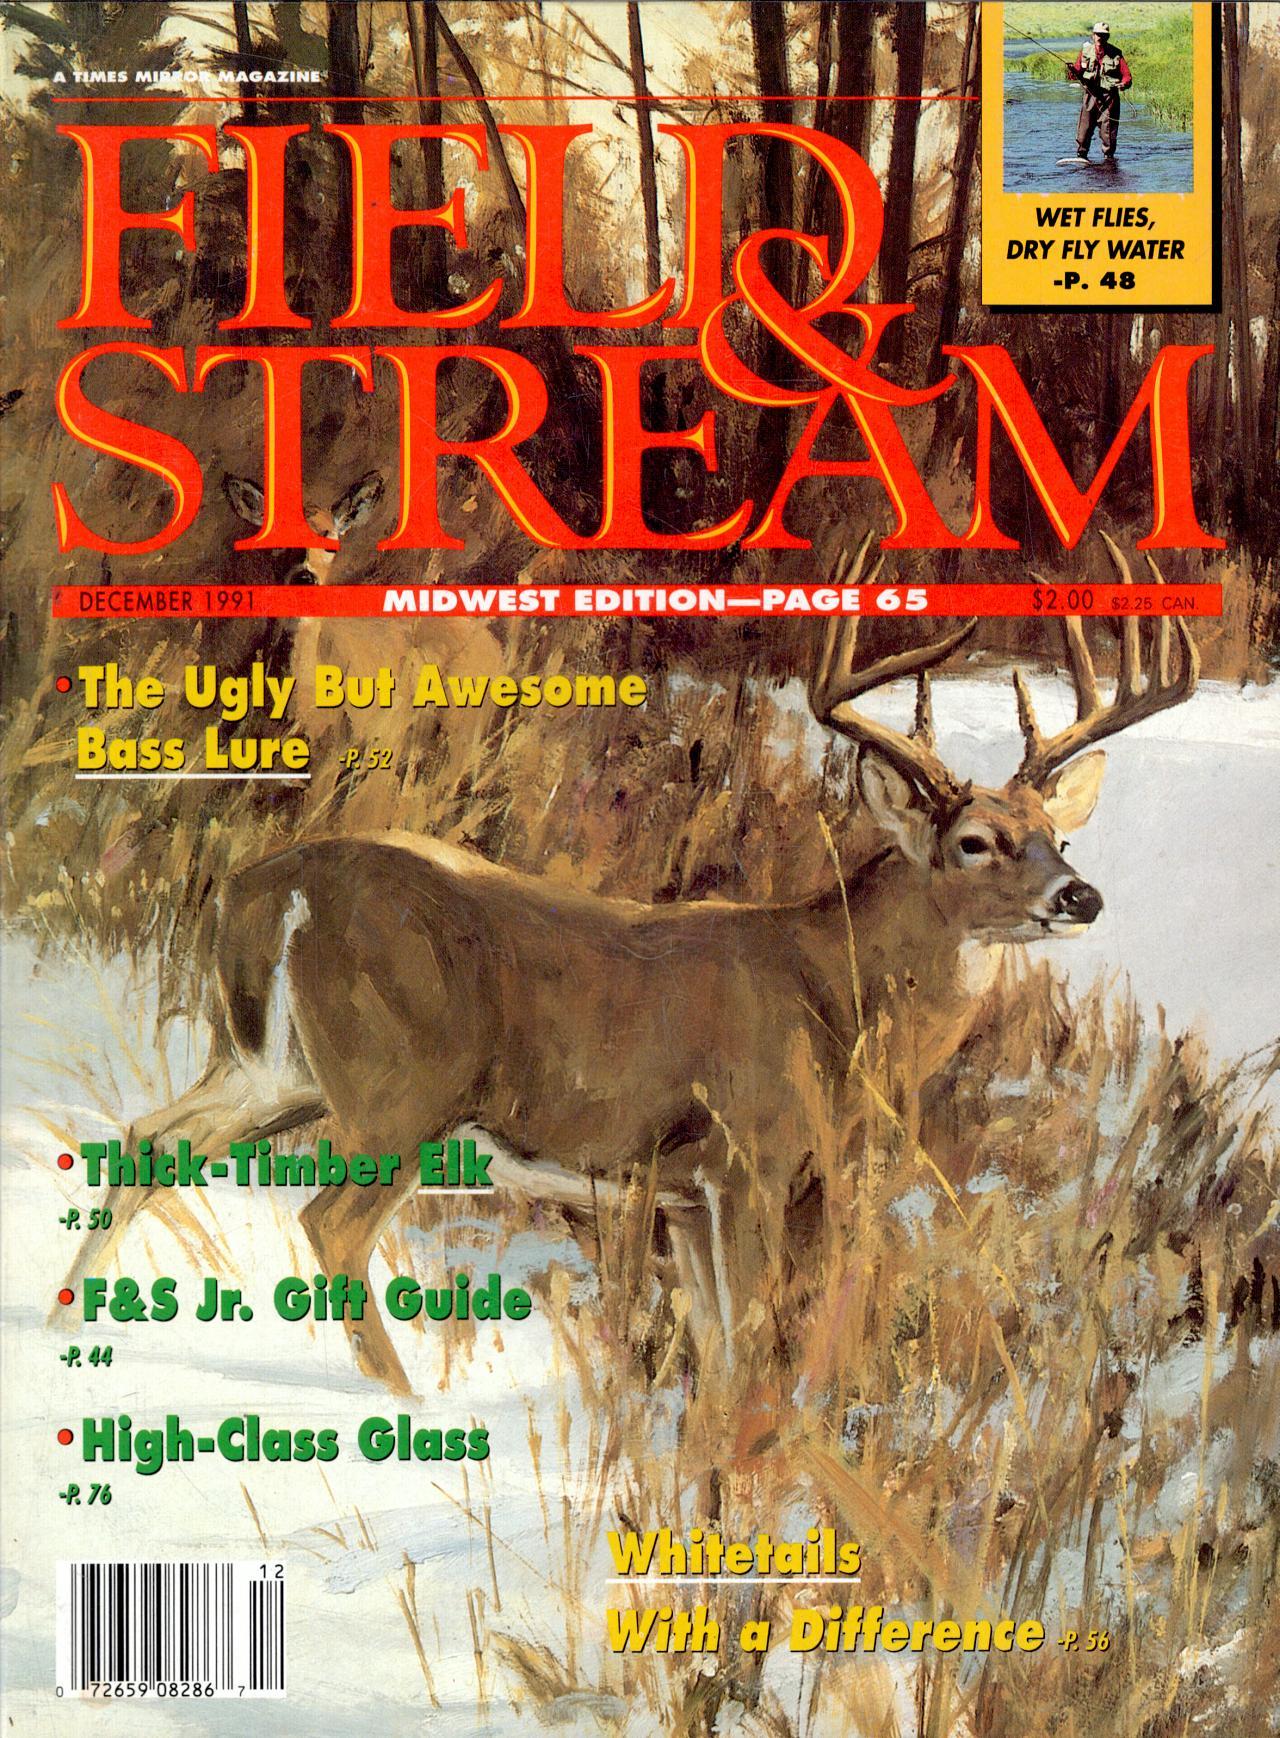 December 1991 Field & Stream cover